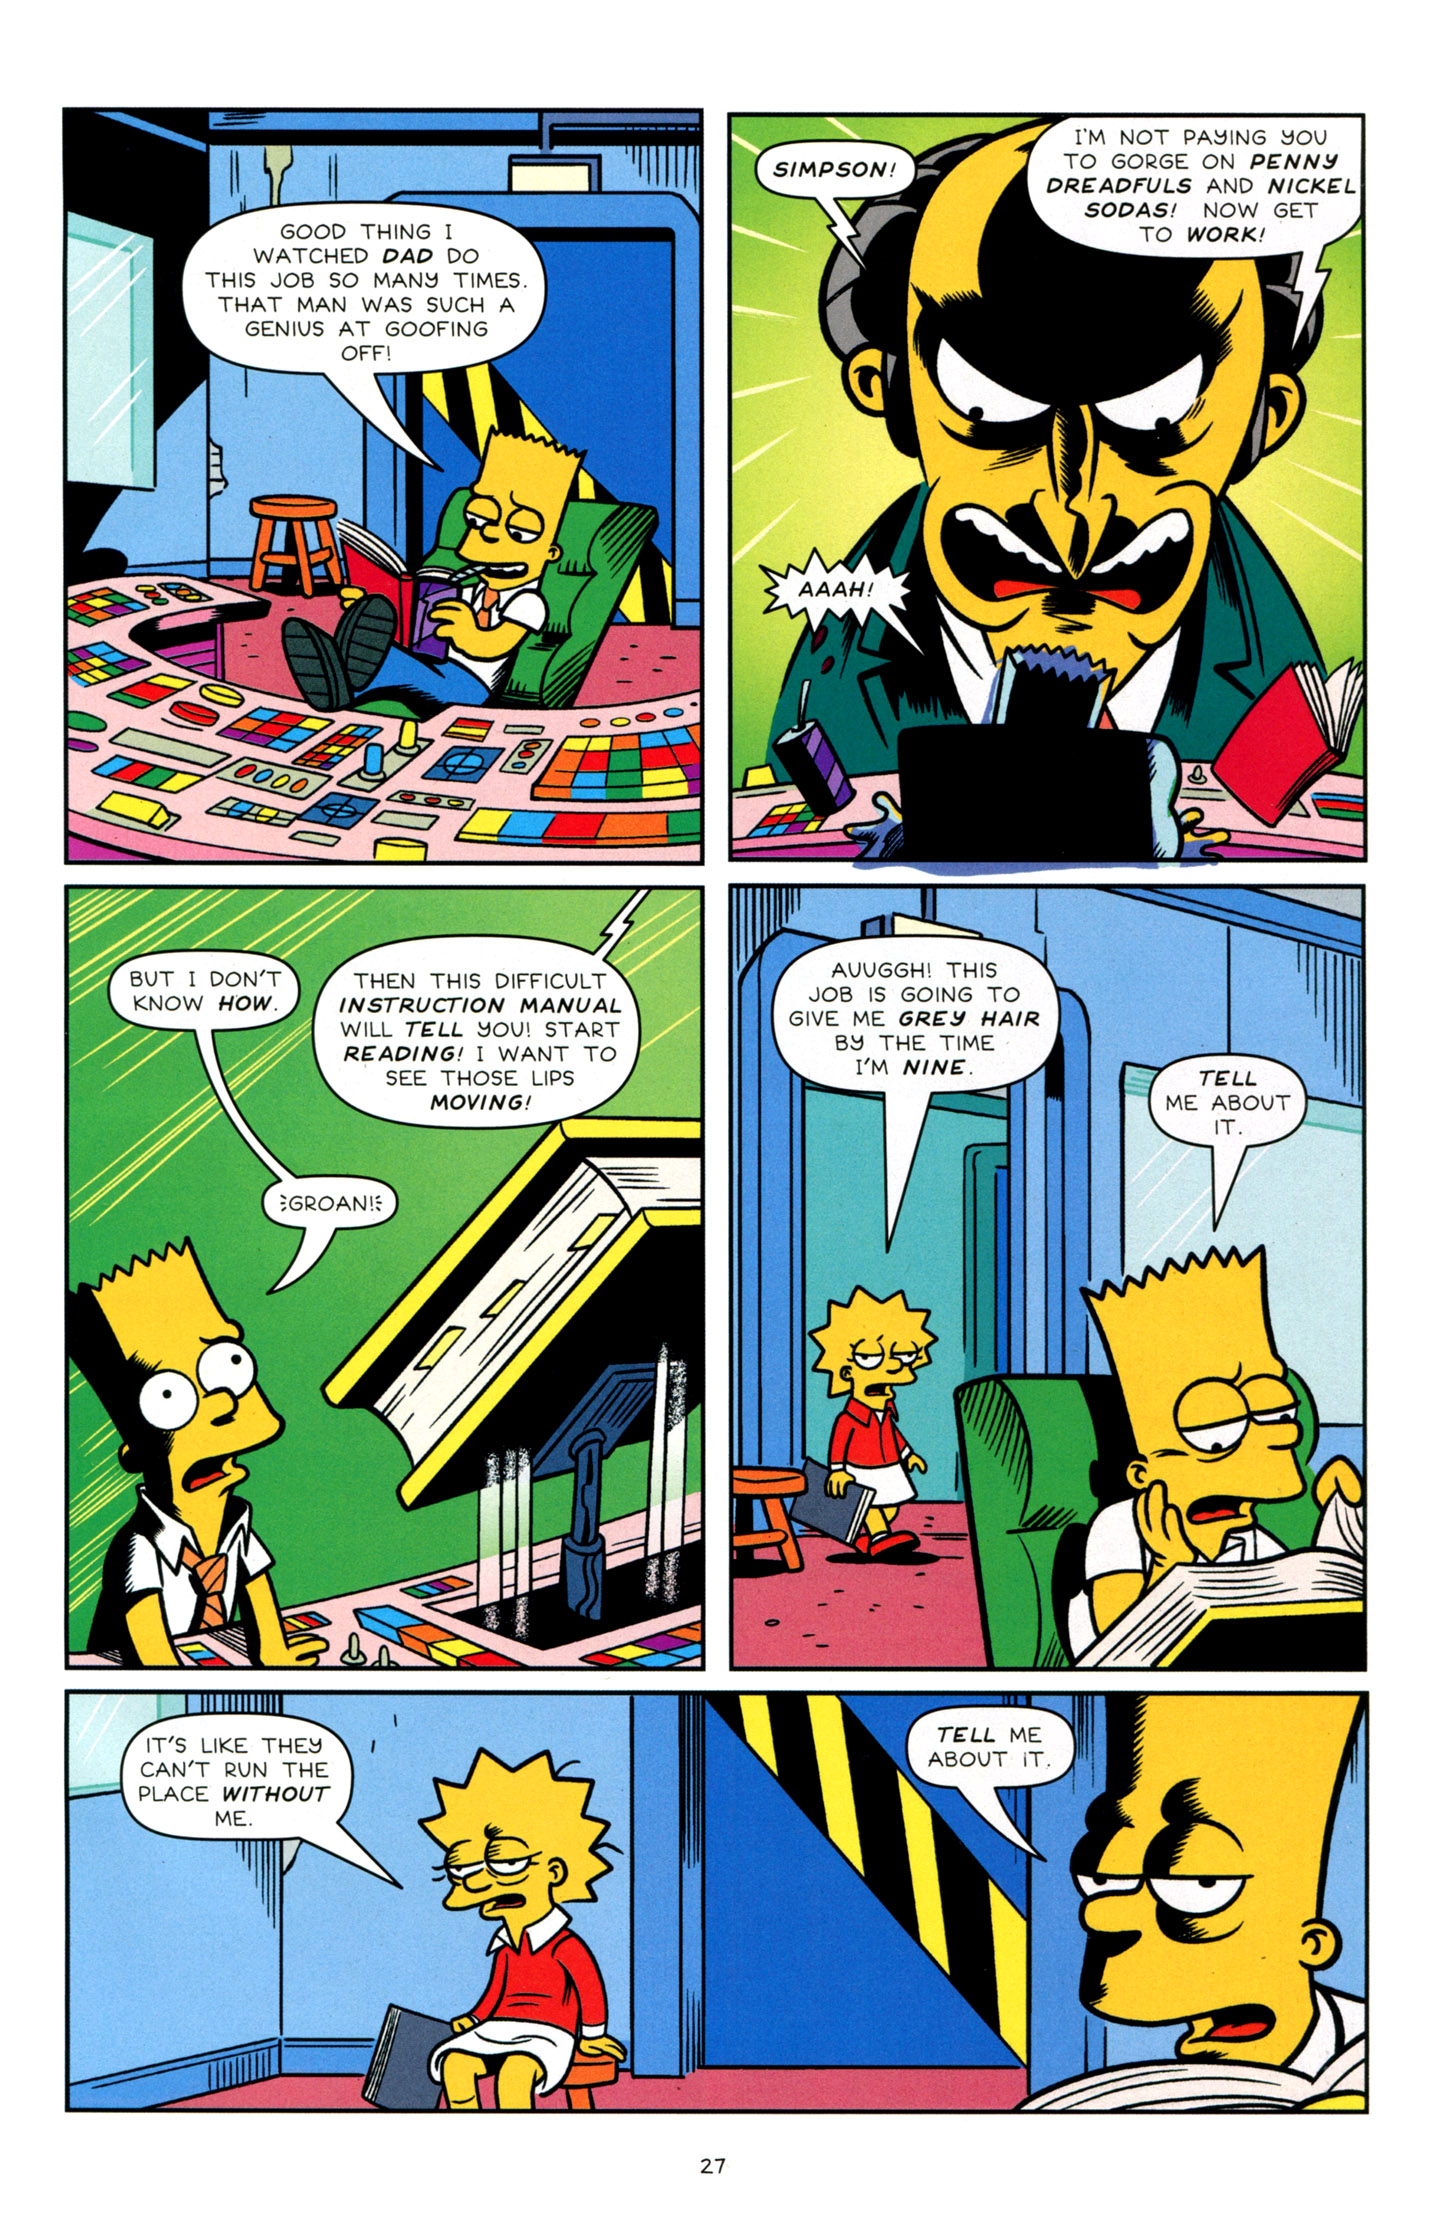 Read Online Simpsons Comics Presents Bart Simpson Comic Issue 62 